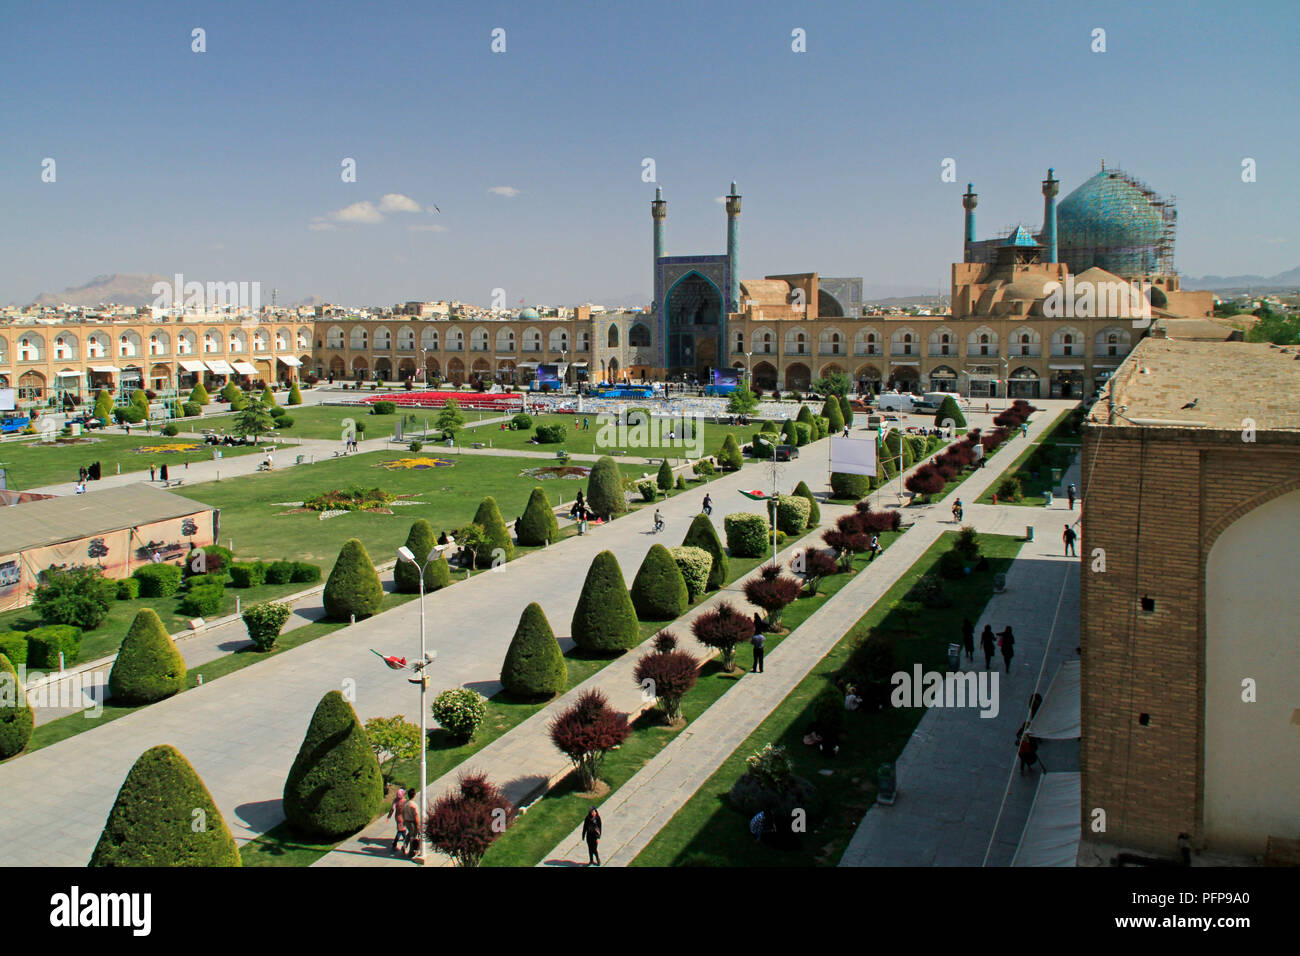 Big city square in Esfahan, Iran Stock Photo